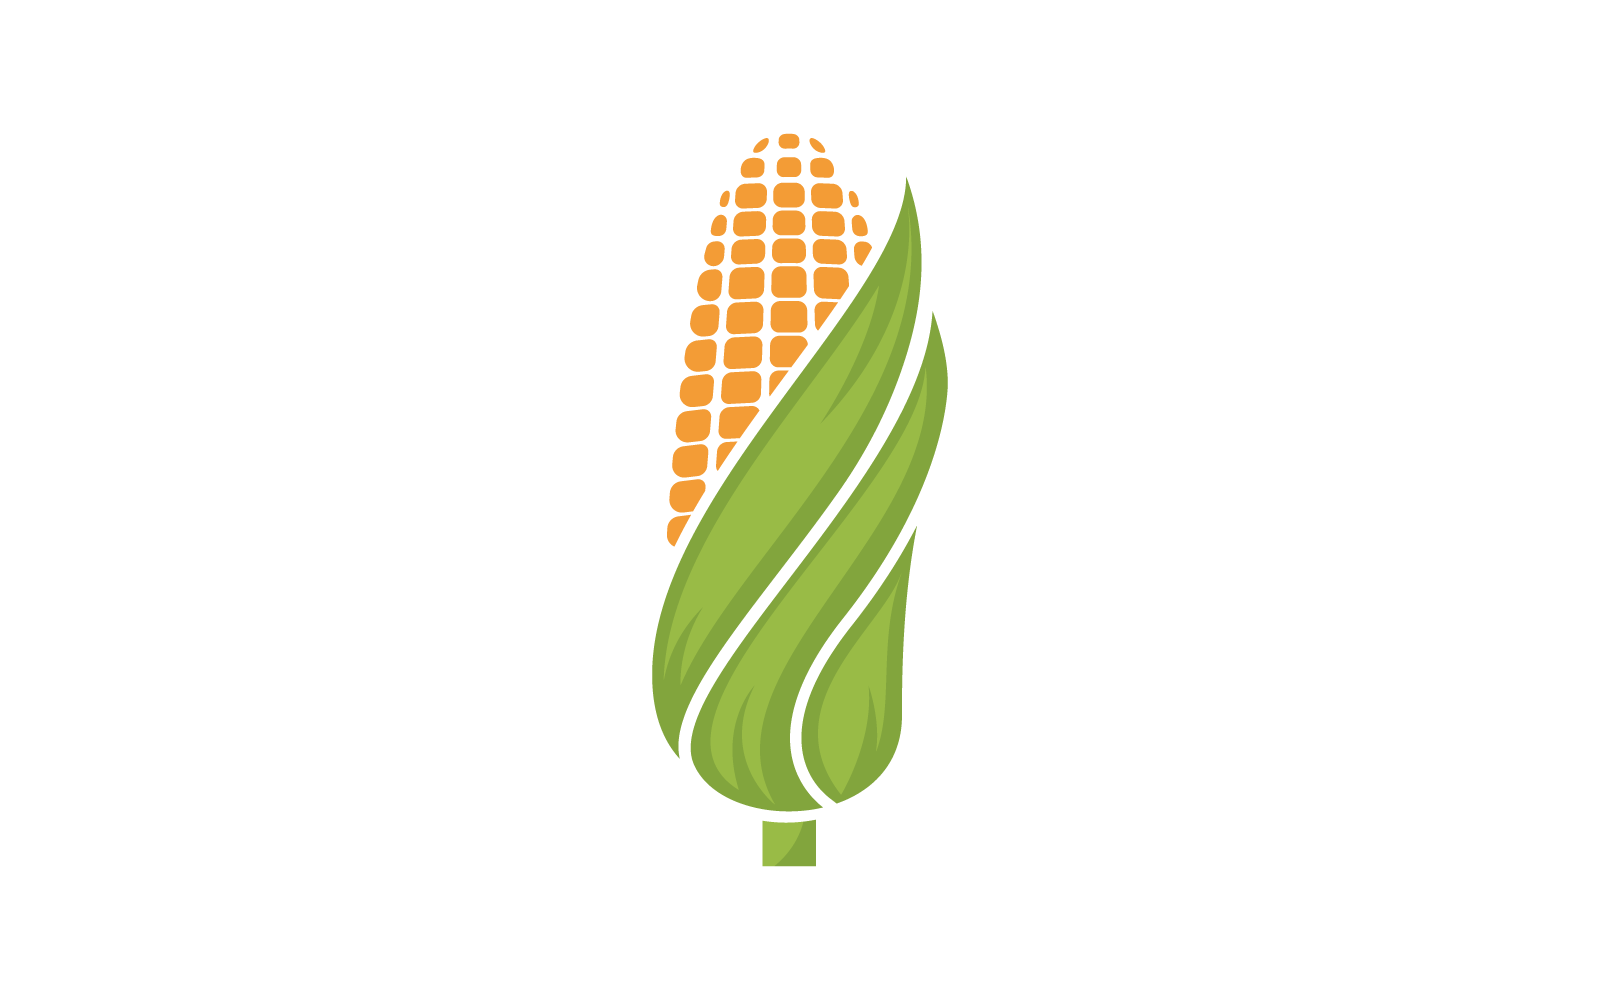 Corn logo illustration vector design template